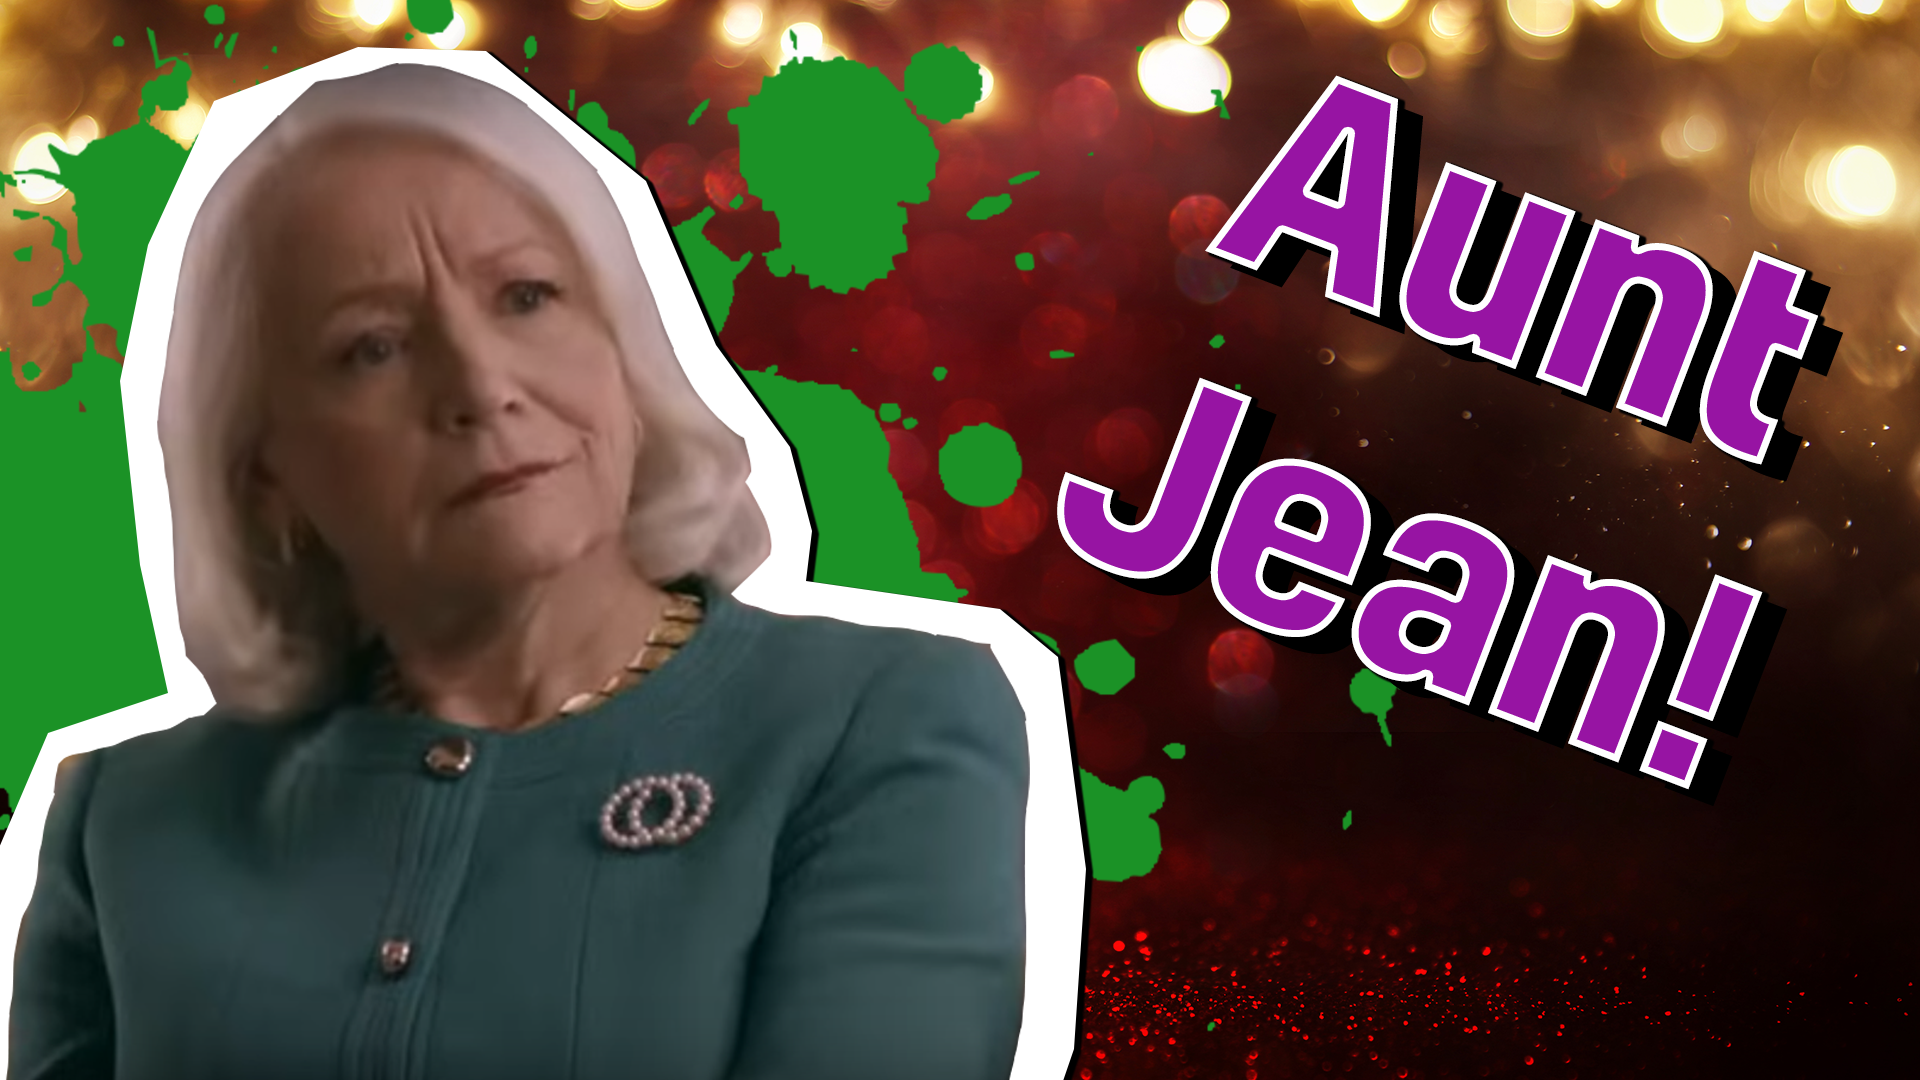 Result: Aunt Jean